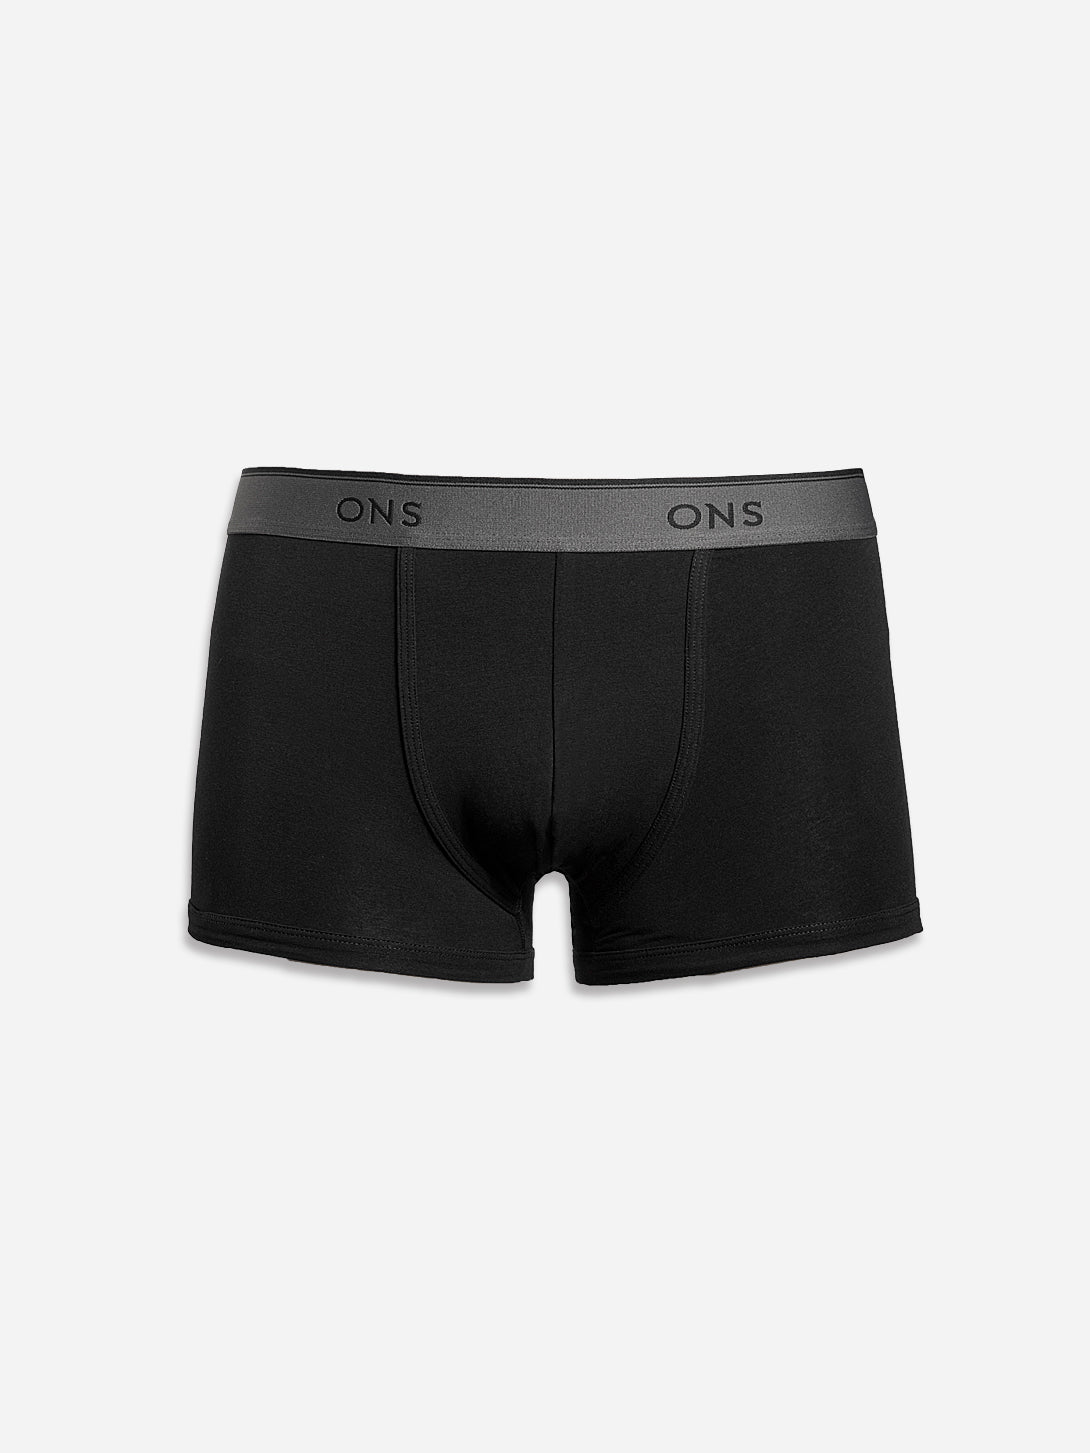 Black Boxer Brief 2 Pieces ONS Clothing Mens Essential Underwear